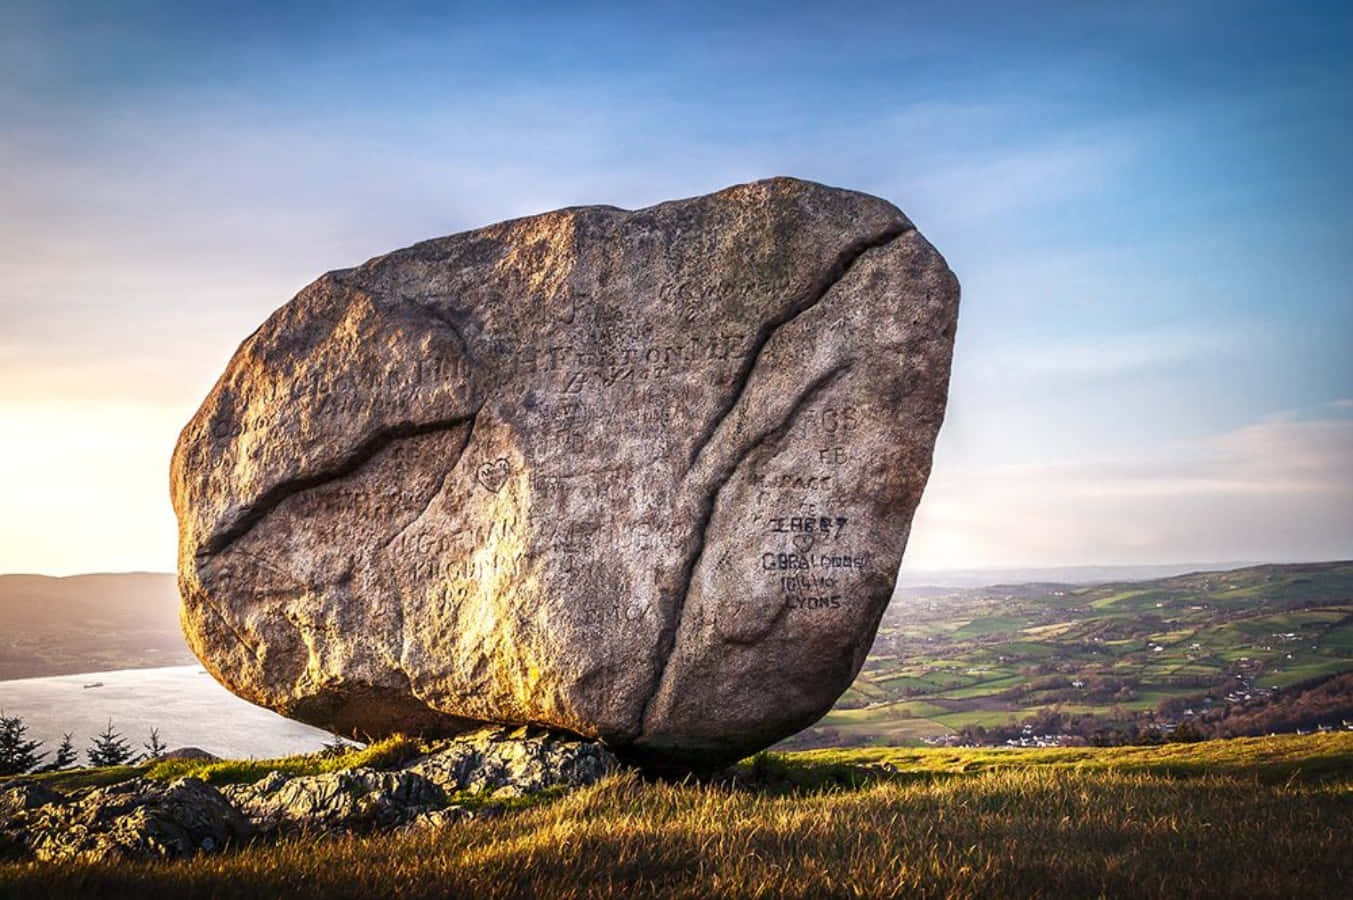 First stone. Ирландские камни. Камни вид сверху. Одинокий булыжник. Злой камень.